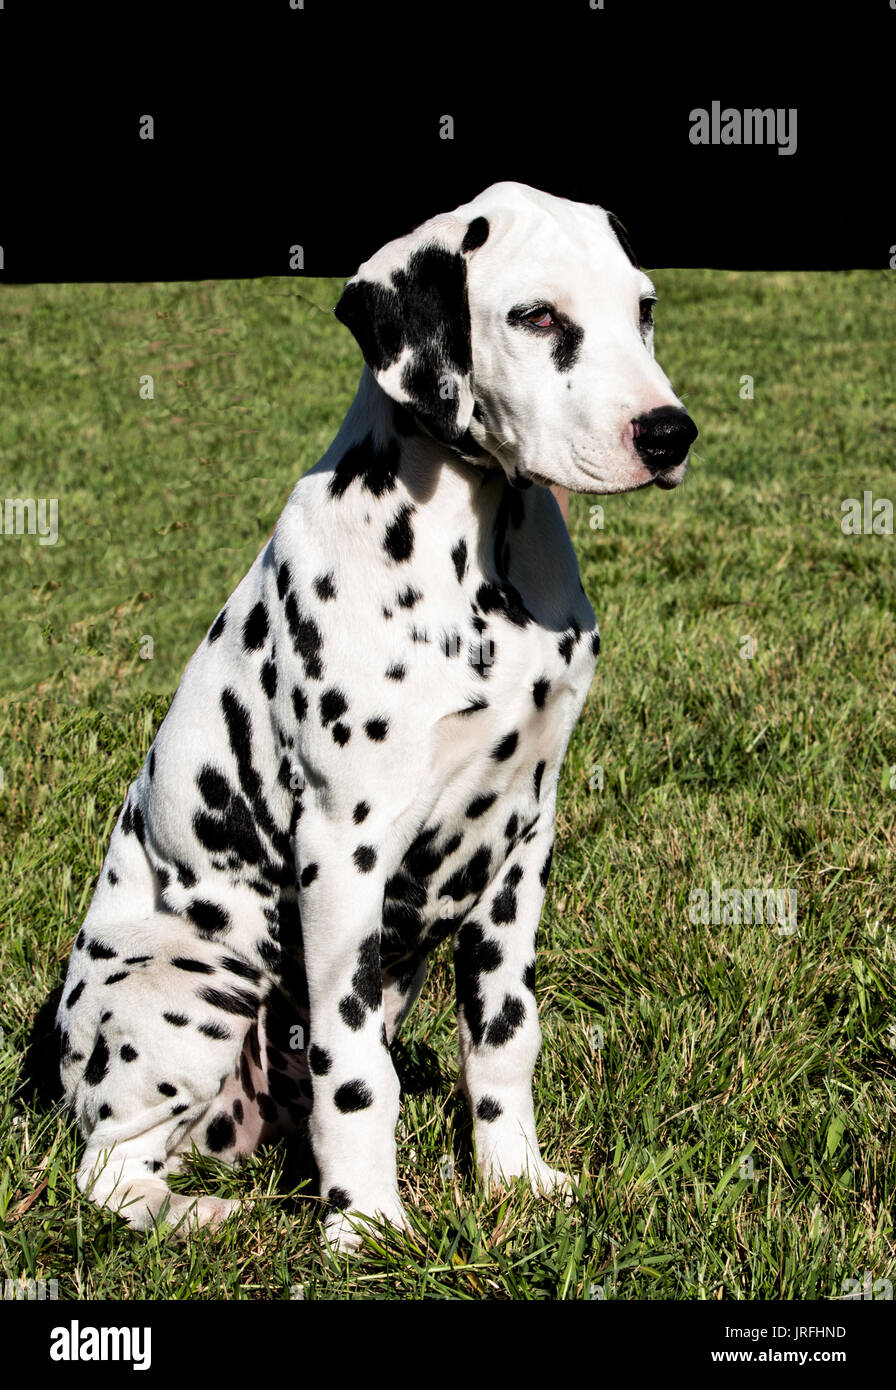 Black and white Dalmatian pet puppy dog sitting on grass Stock Photo